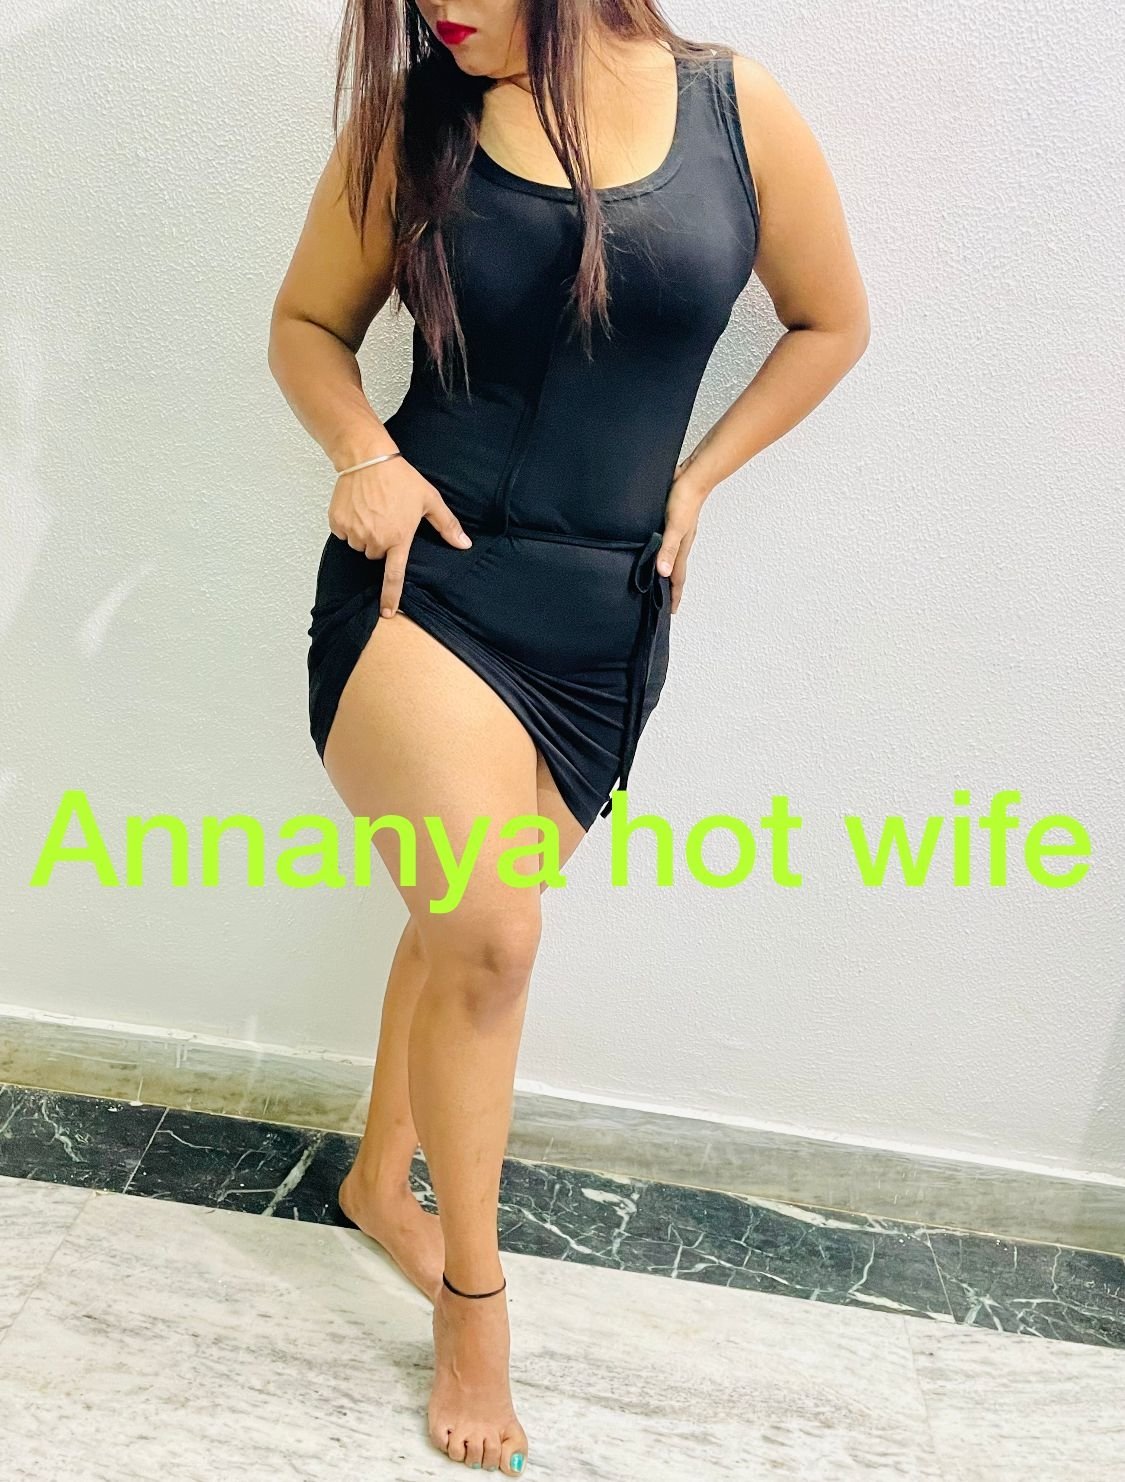 Annanya Hot Wife, Indian escort in New Delhi